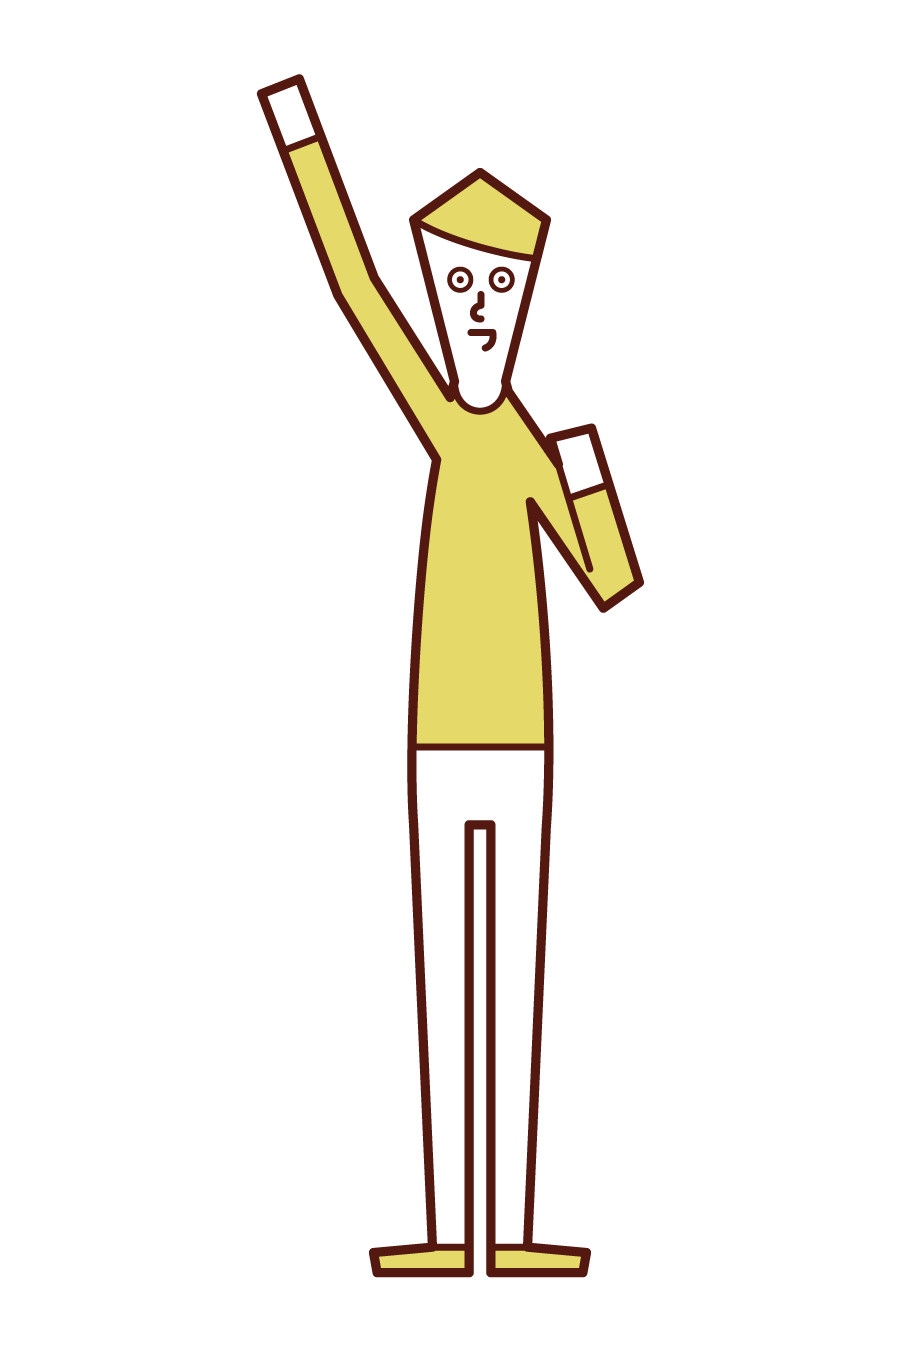 Illustration of Aei-O (man) who raises his fist high